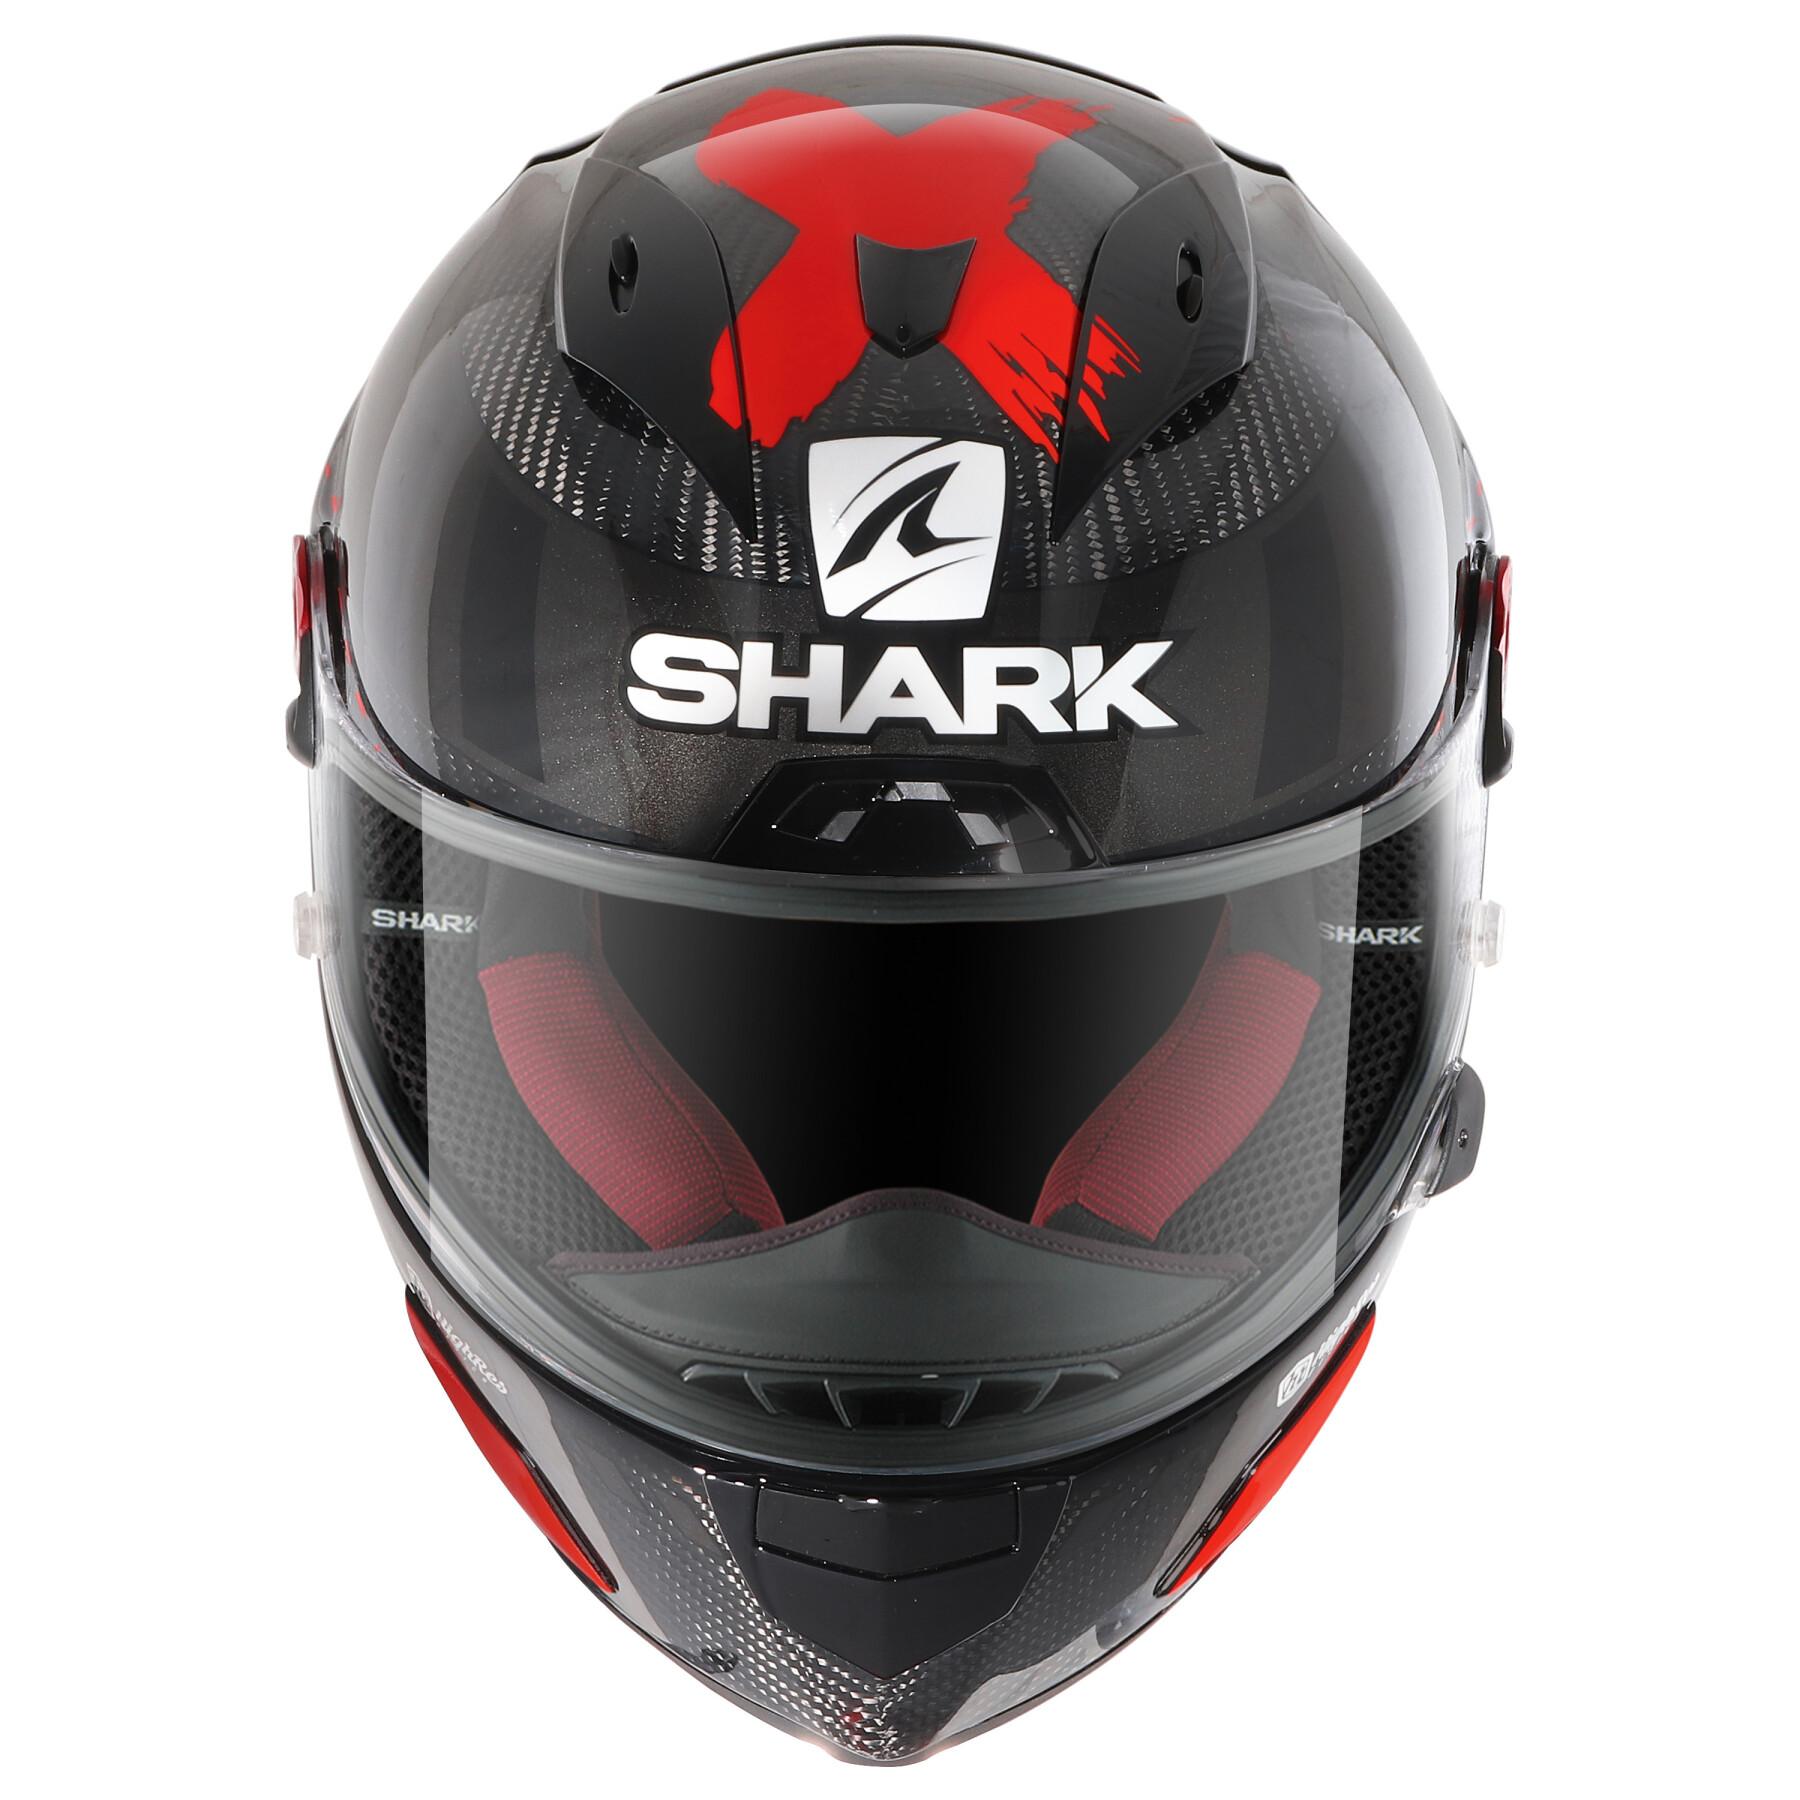 Casco de moto integral Shark race-r pro GP lorenzo winter test 99